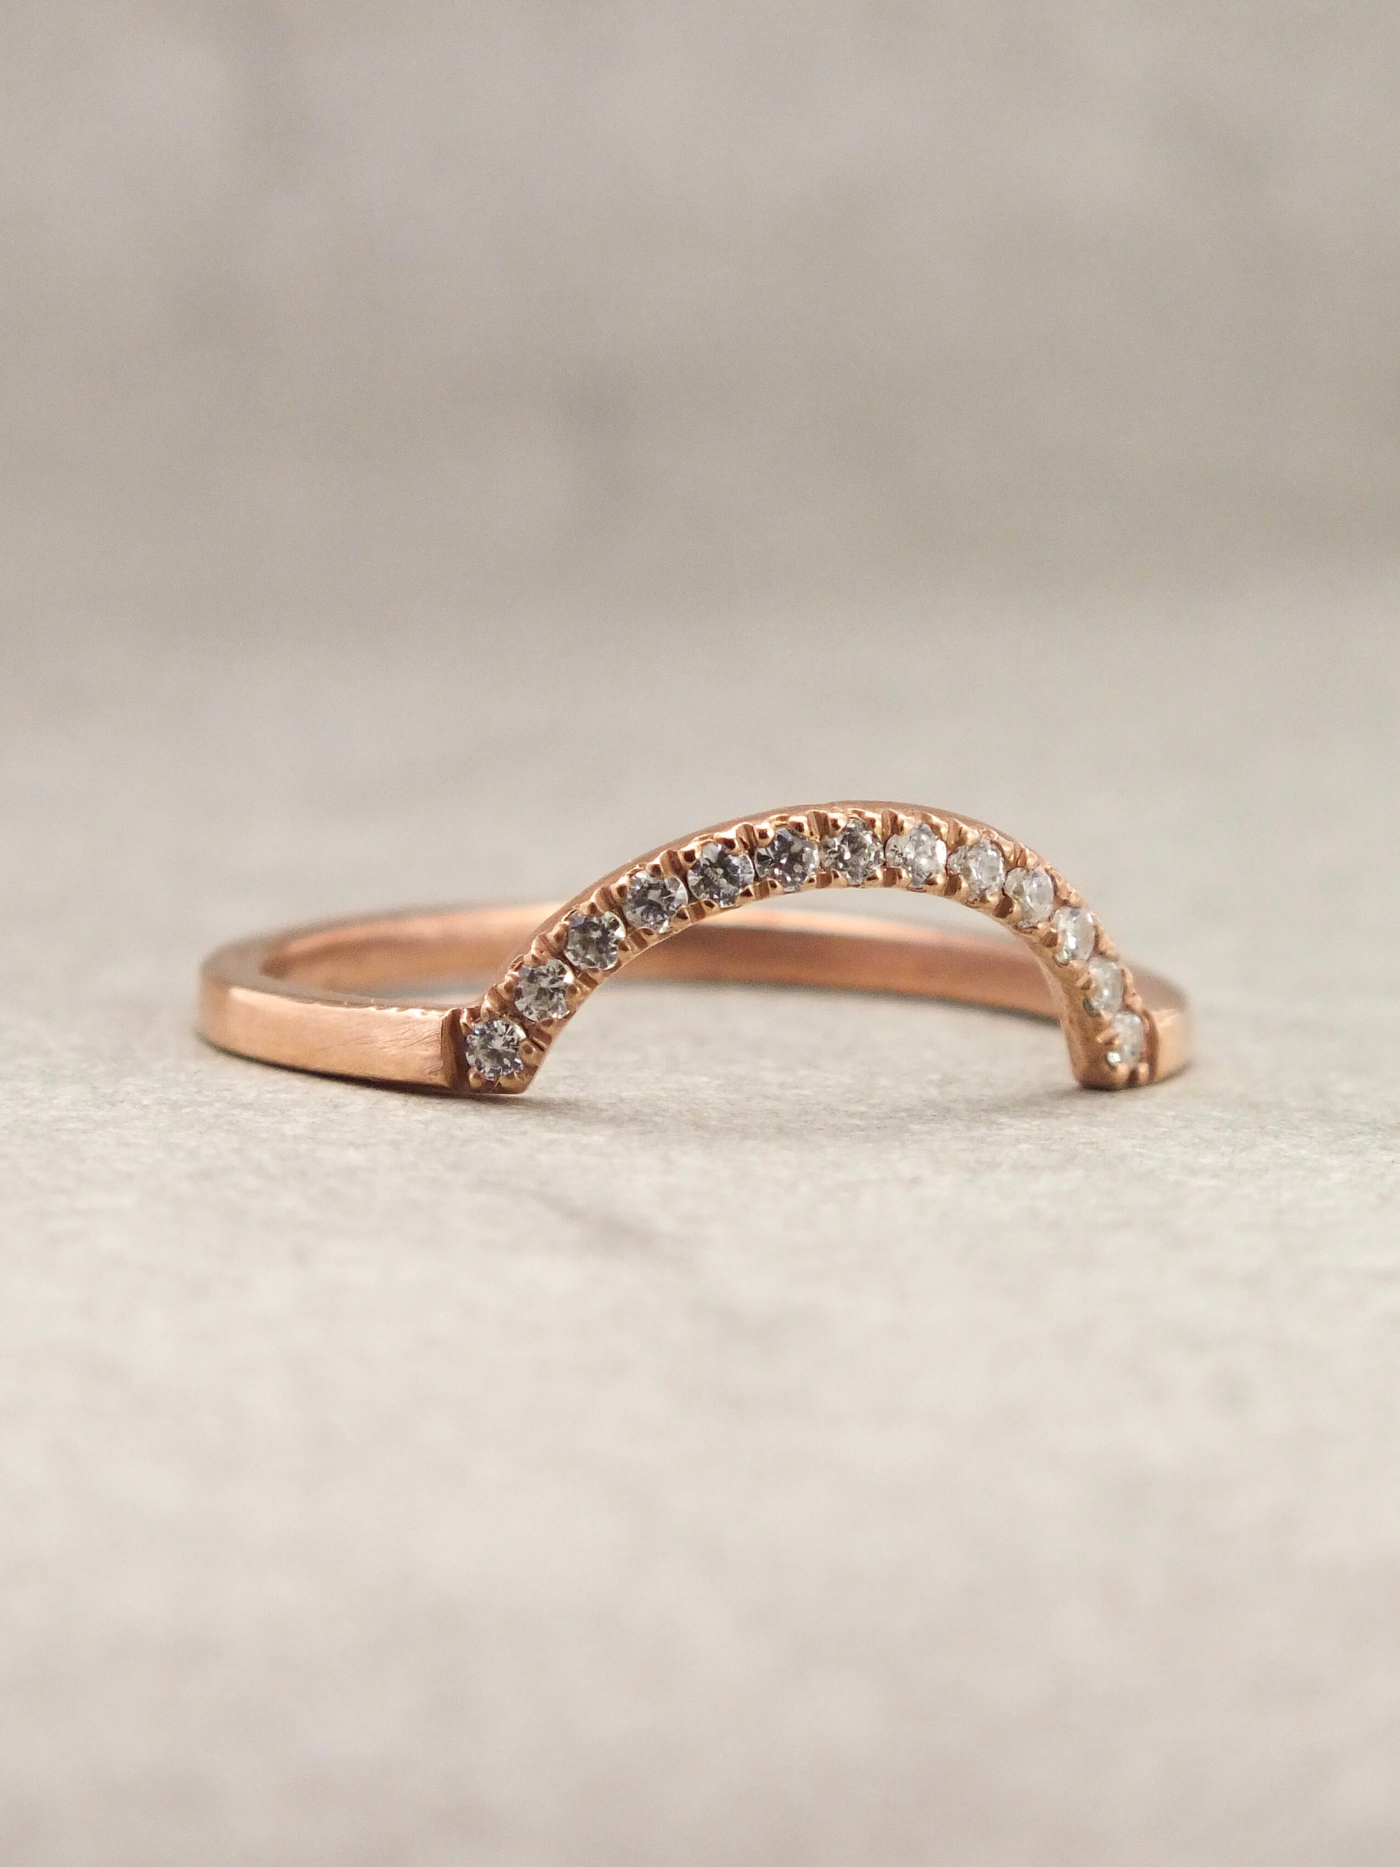 Diamond Halo Wedding Ring